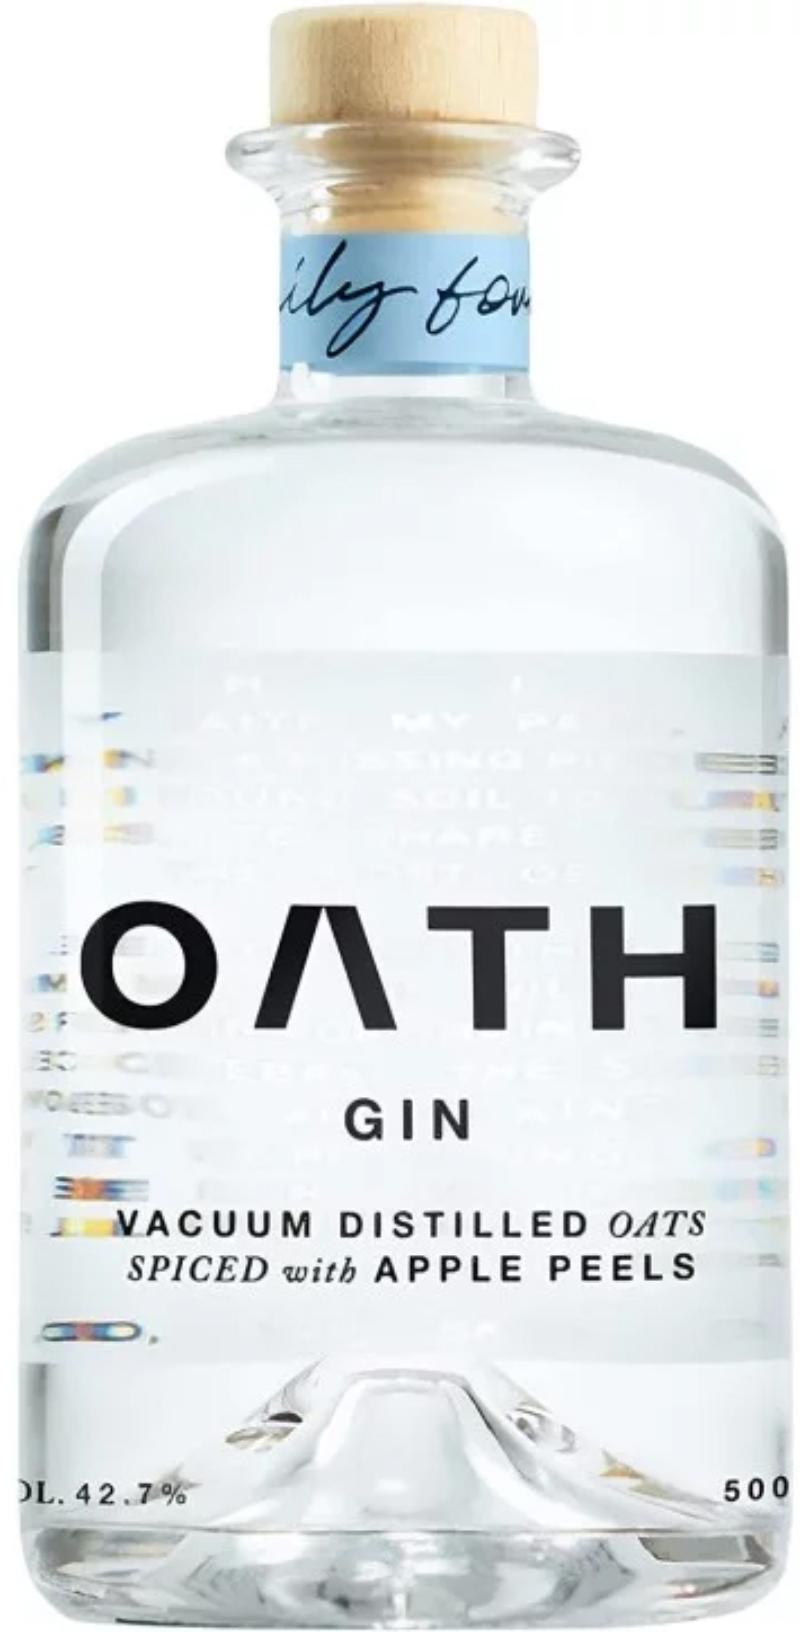 Oath Gin - Oath Gin 50 cl 42.7% vol